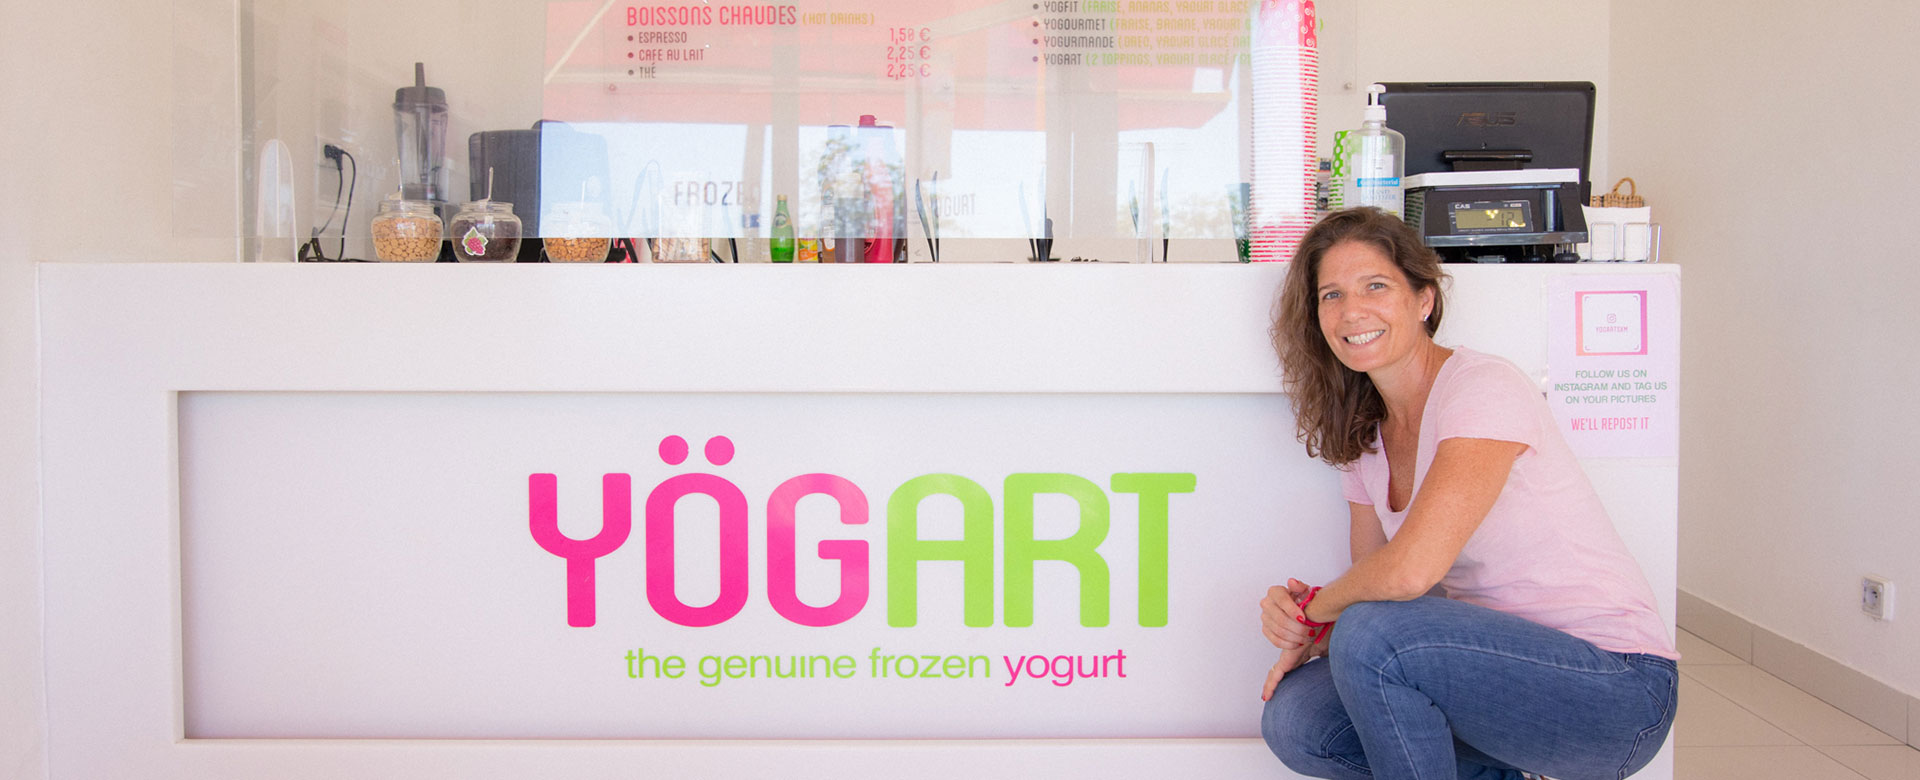 Yogart - Comptoir & Logo